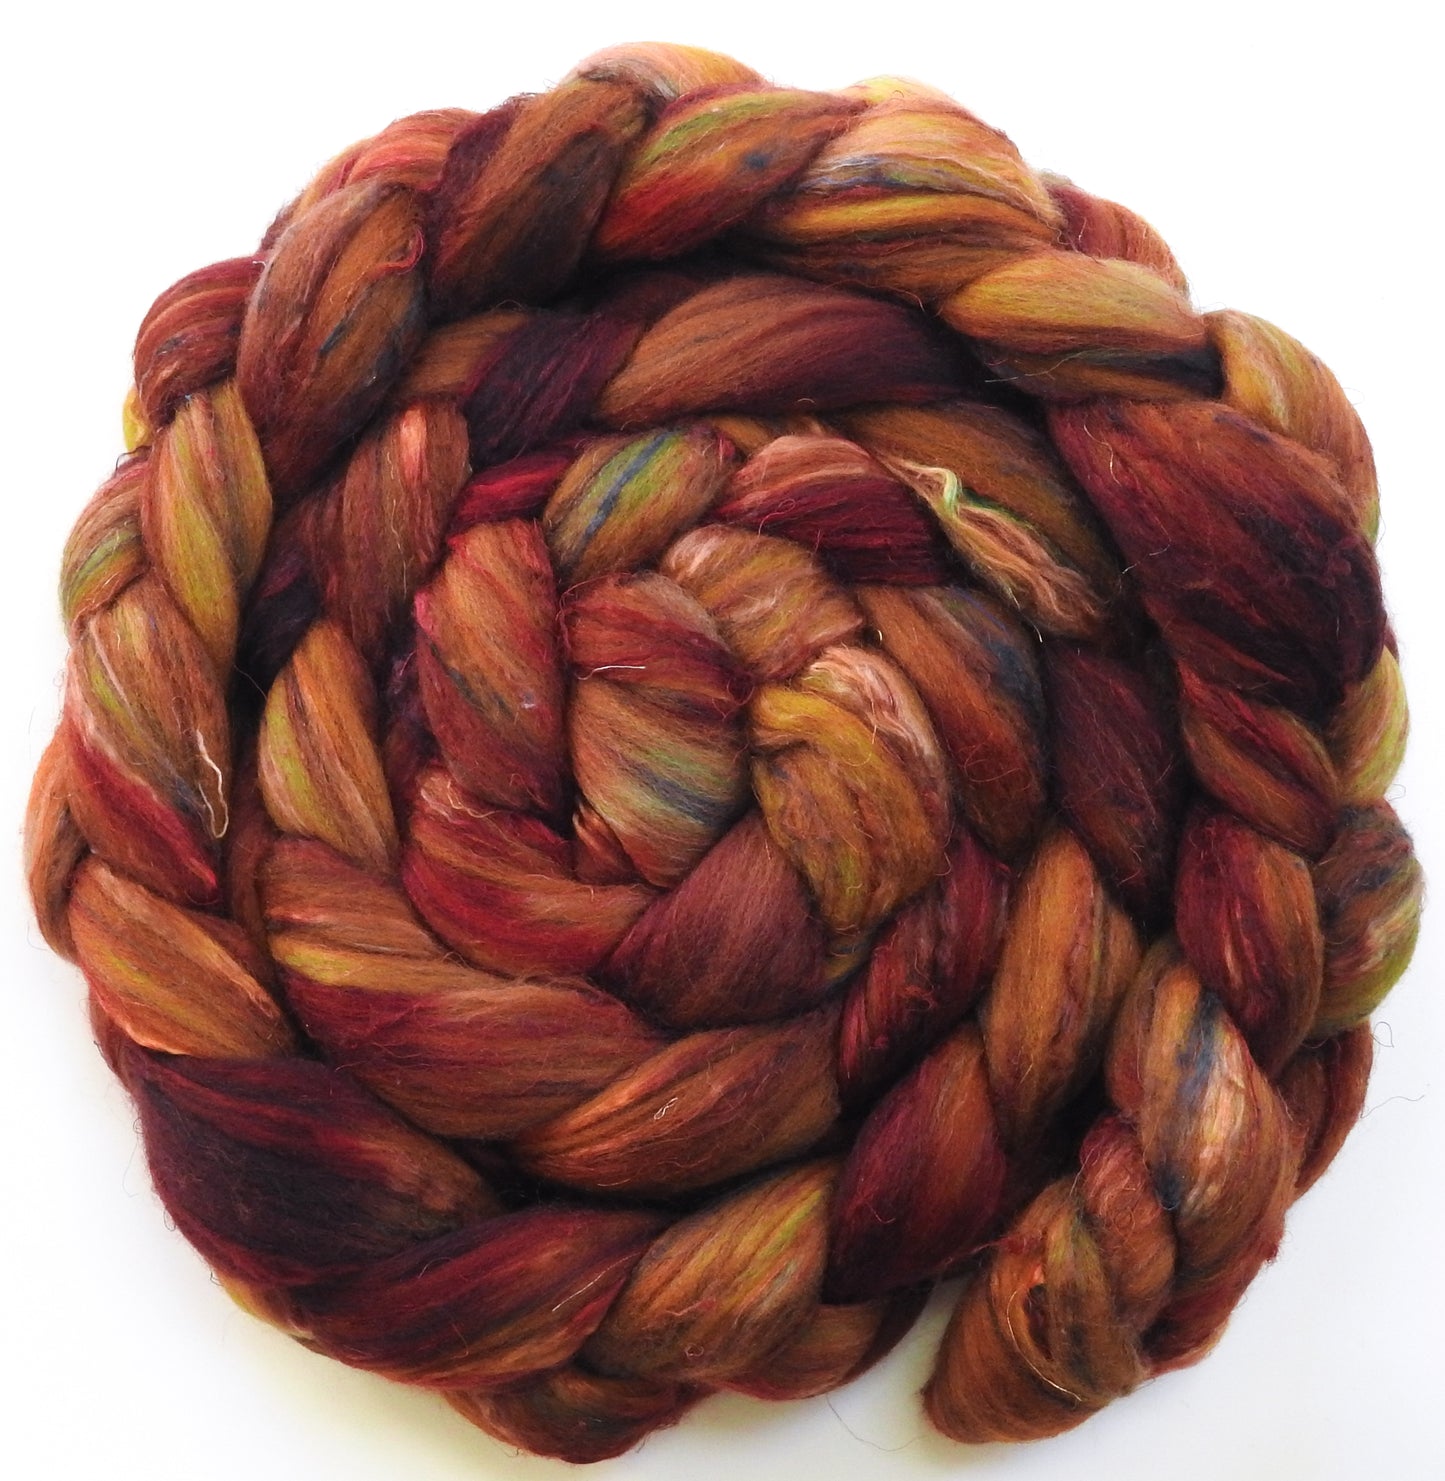 Kimchi (5.7 oz) - Batt in a Braid #39  - Falkland Merino/ Mulberry Silk / Sari Silk (50/25/25)